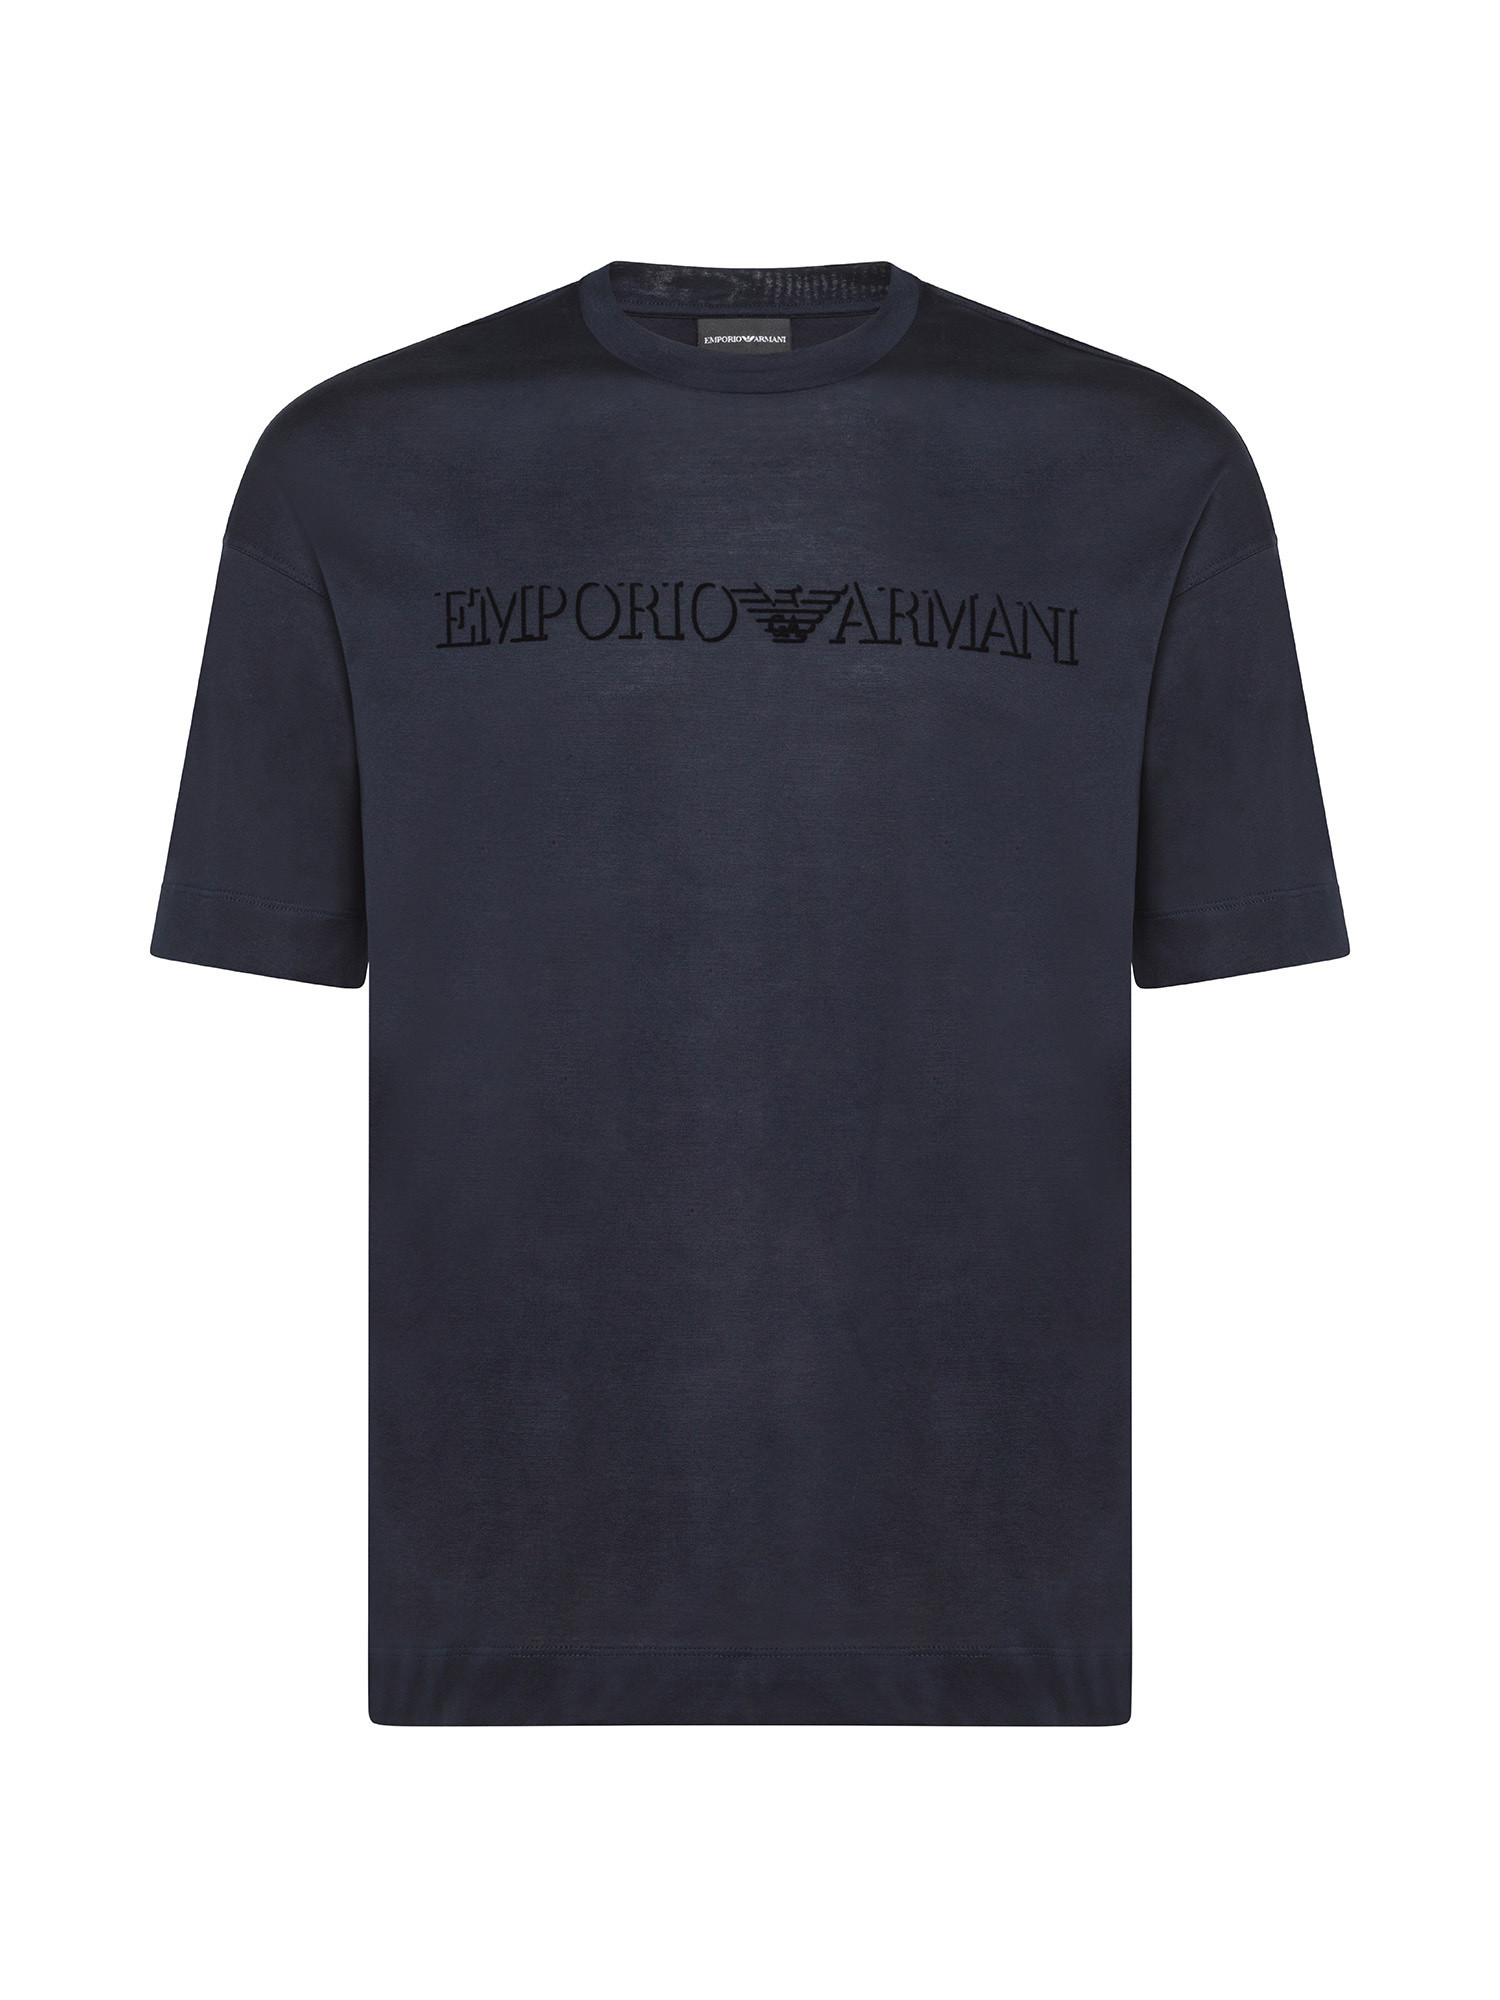 Emporio Armani - T-shirt in jersey mercerizzato con logo flock, Blu scuro, large image number 0